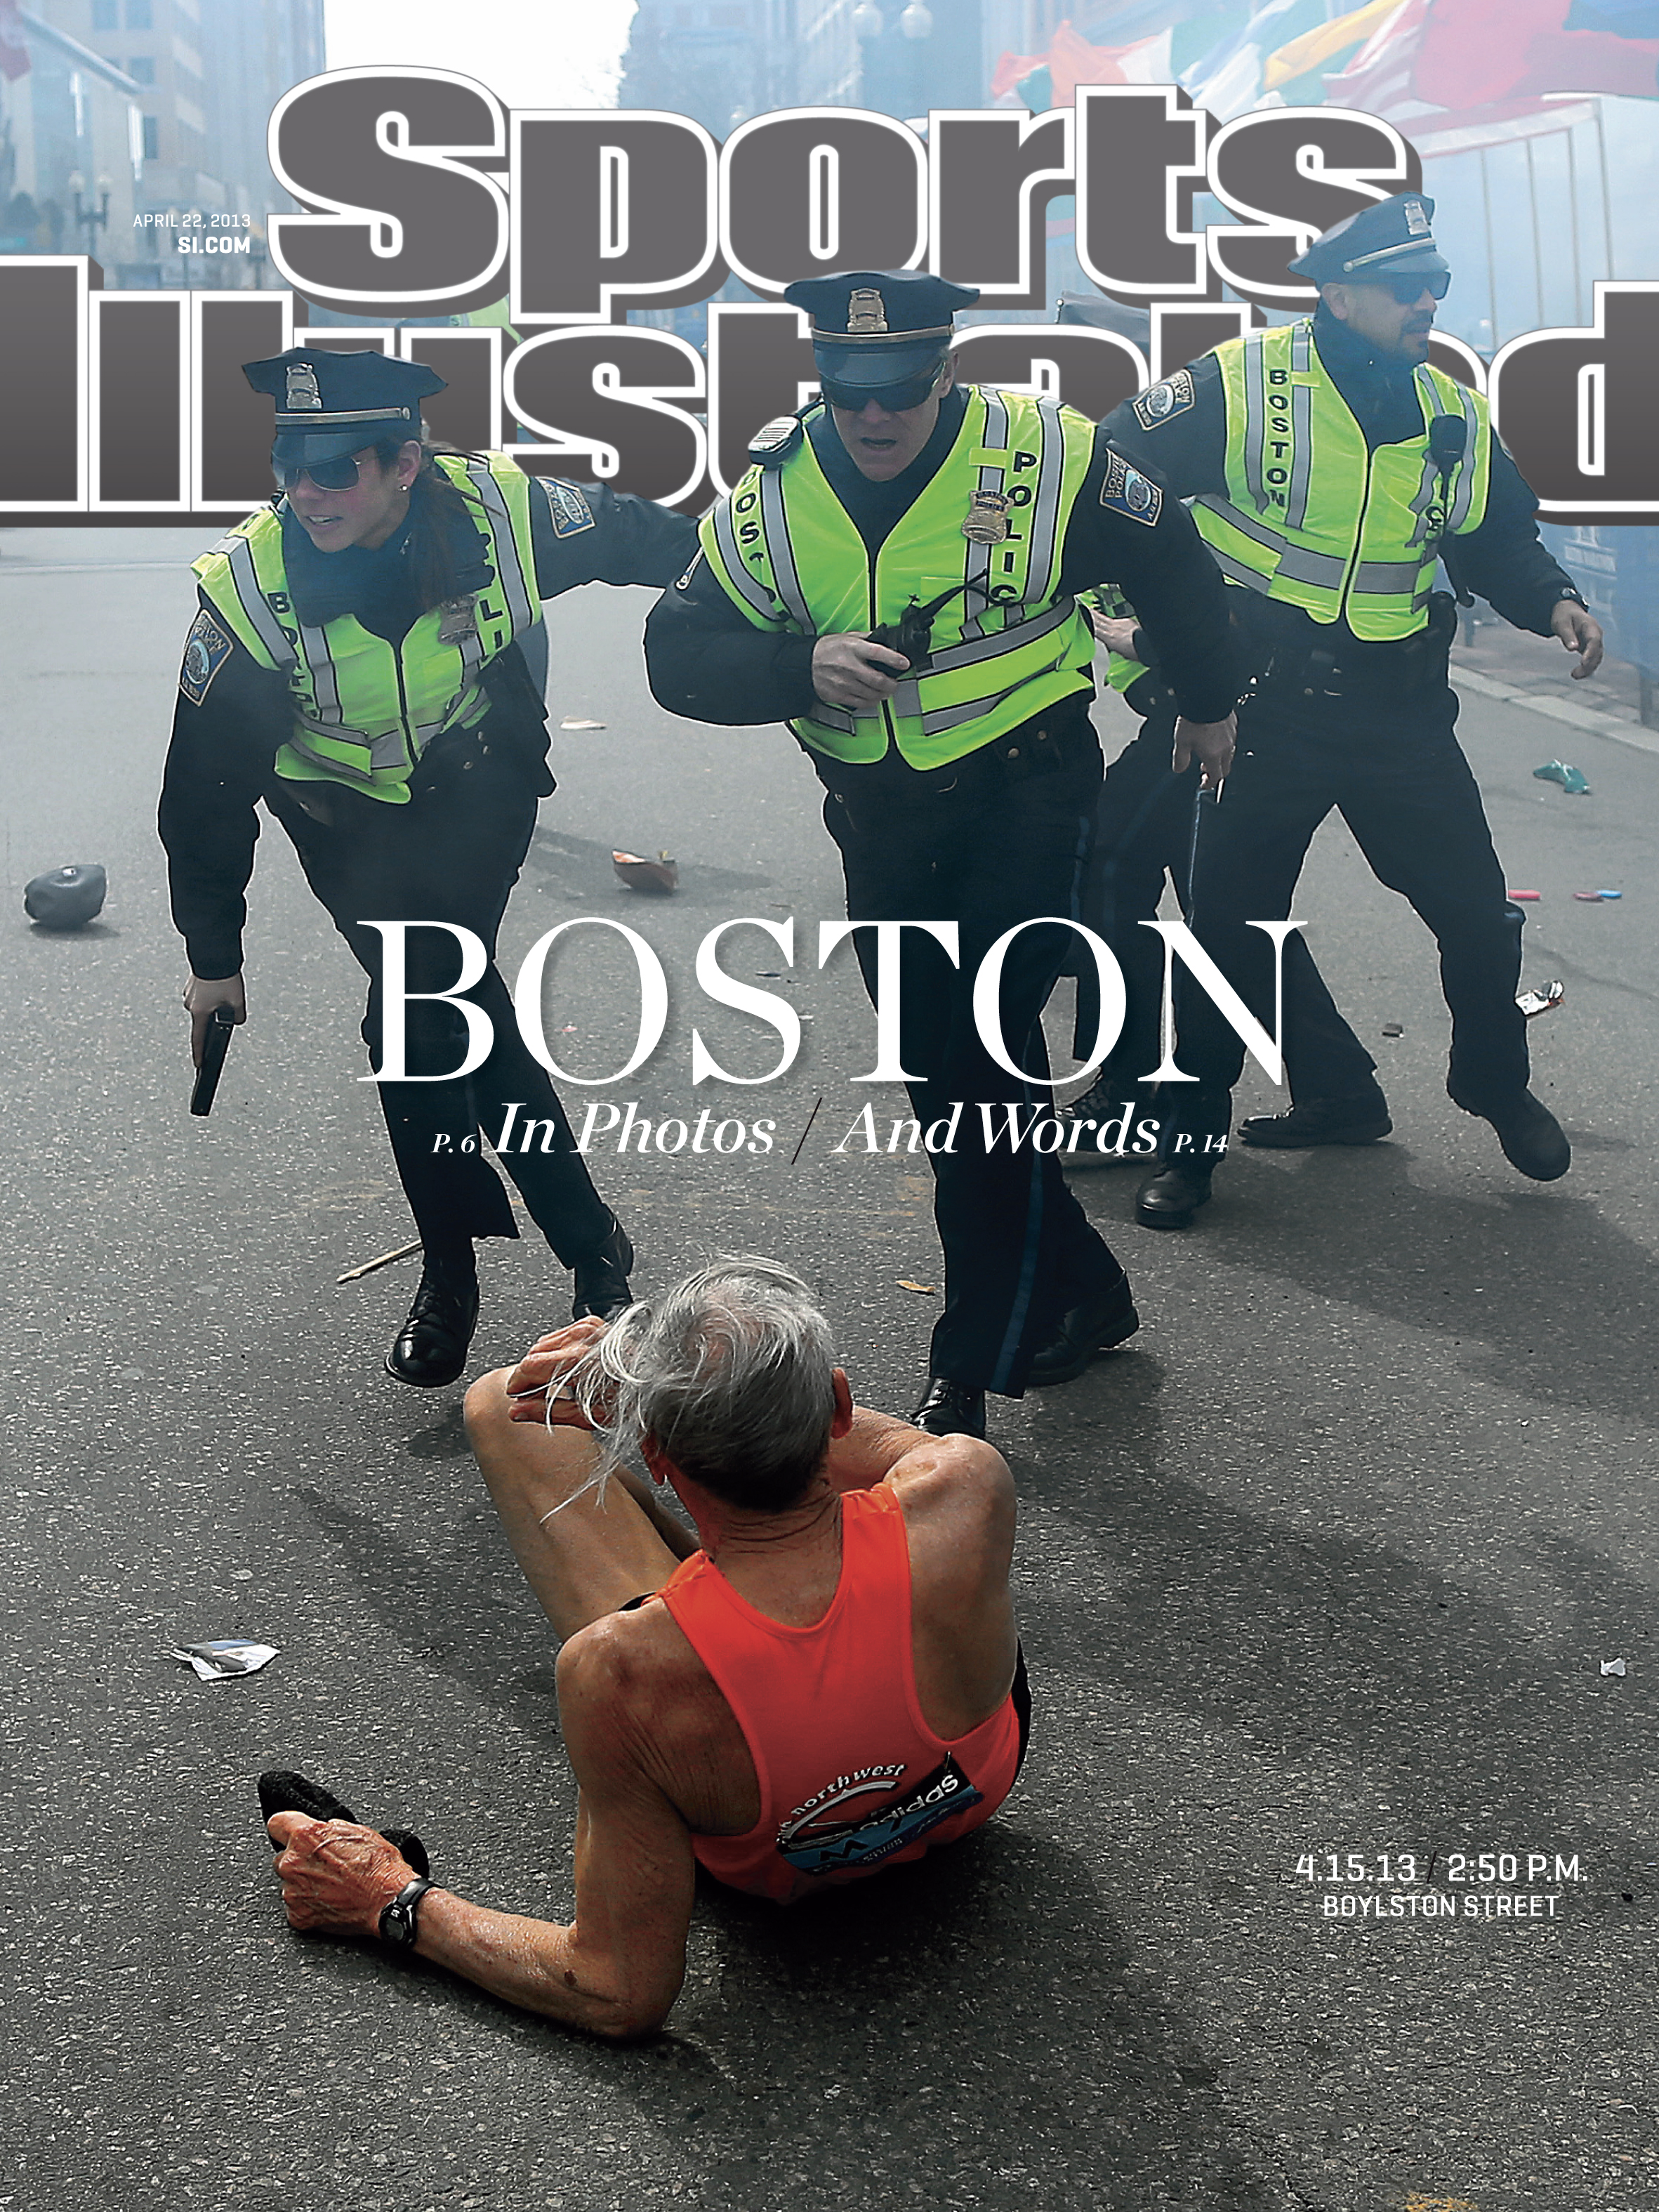 Sports Illustrated-April 22, "BOSTON"